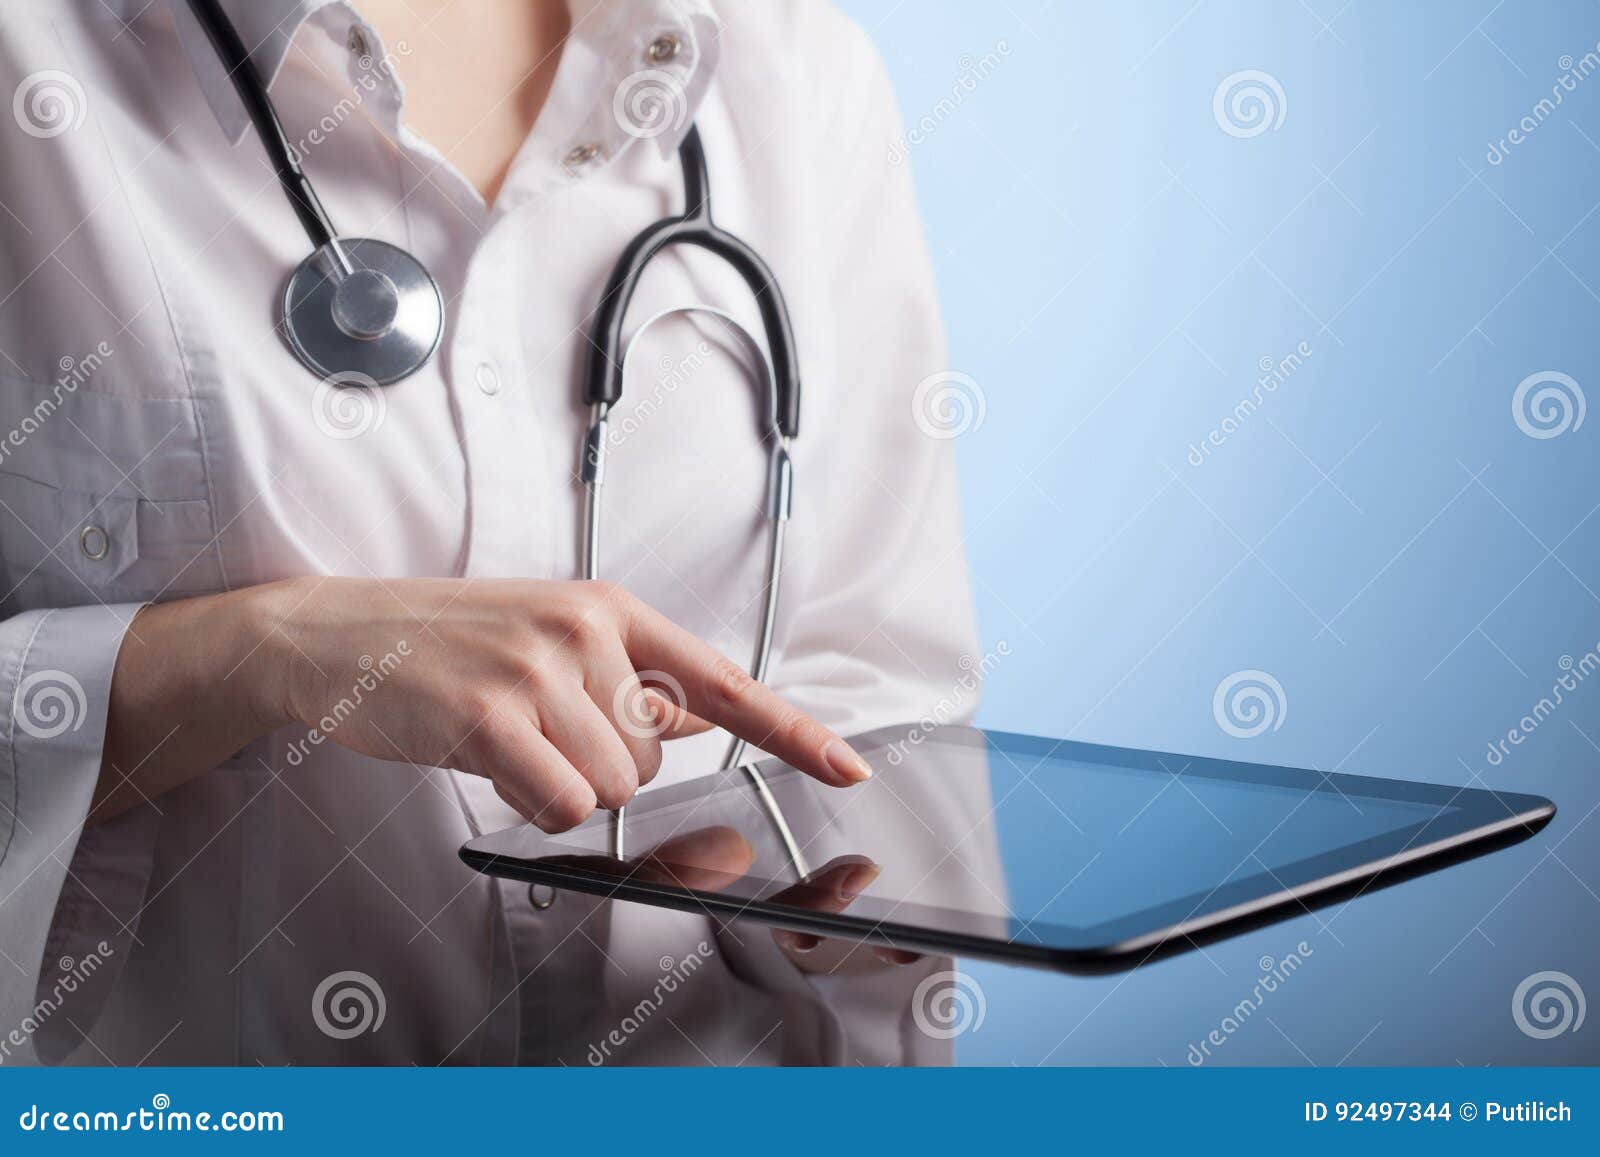 doctor ipad health medical clinic worker modern